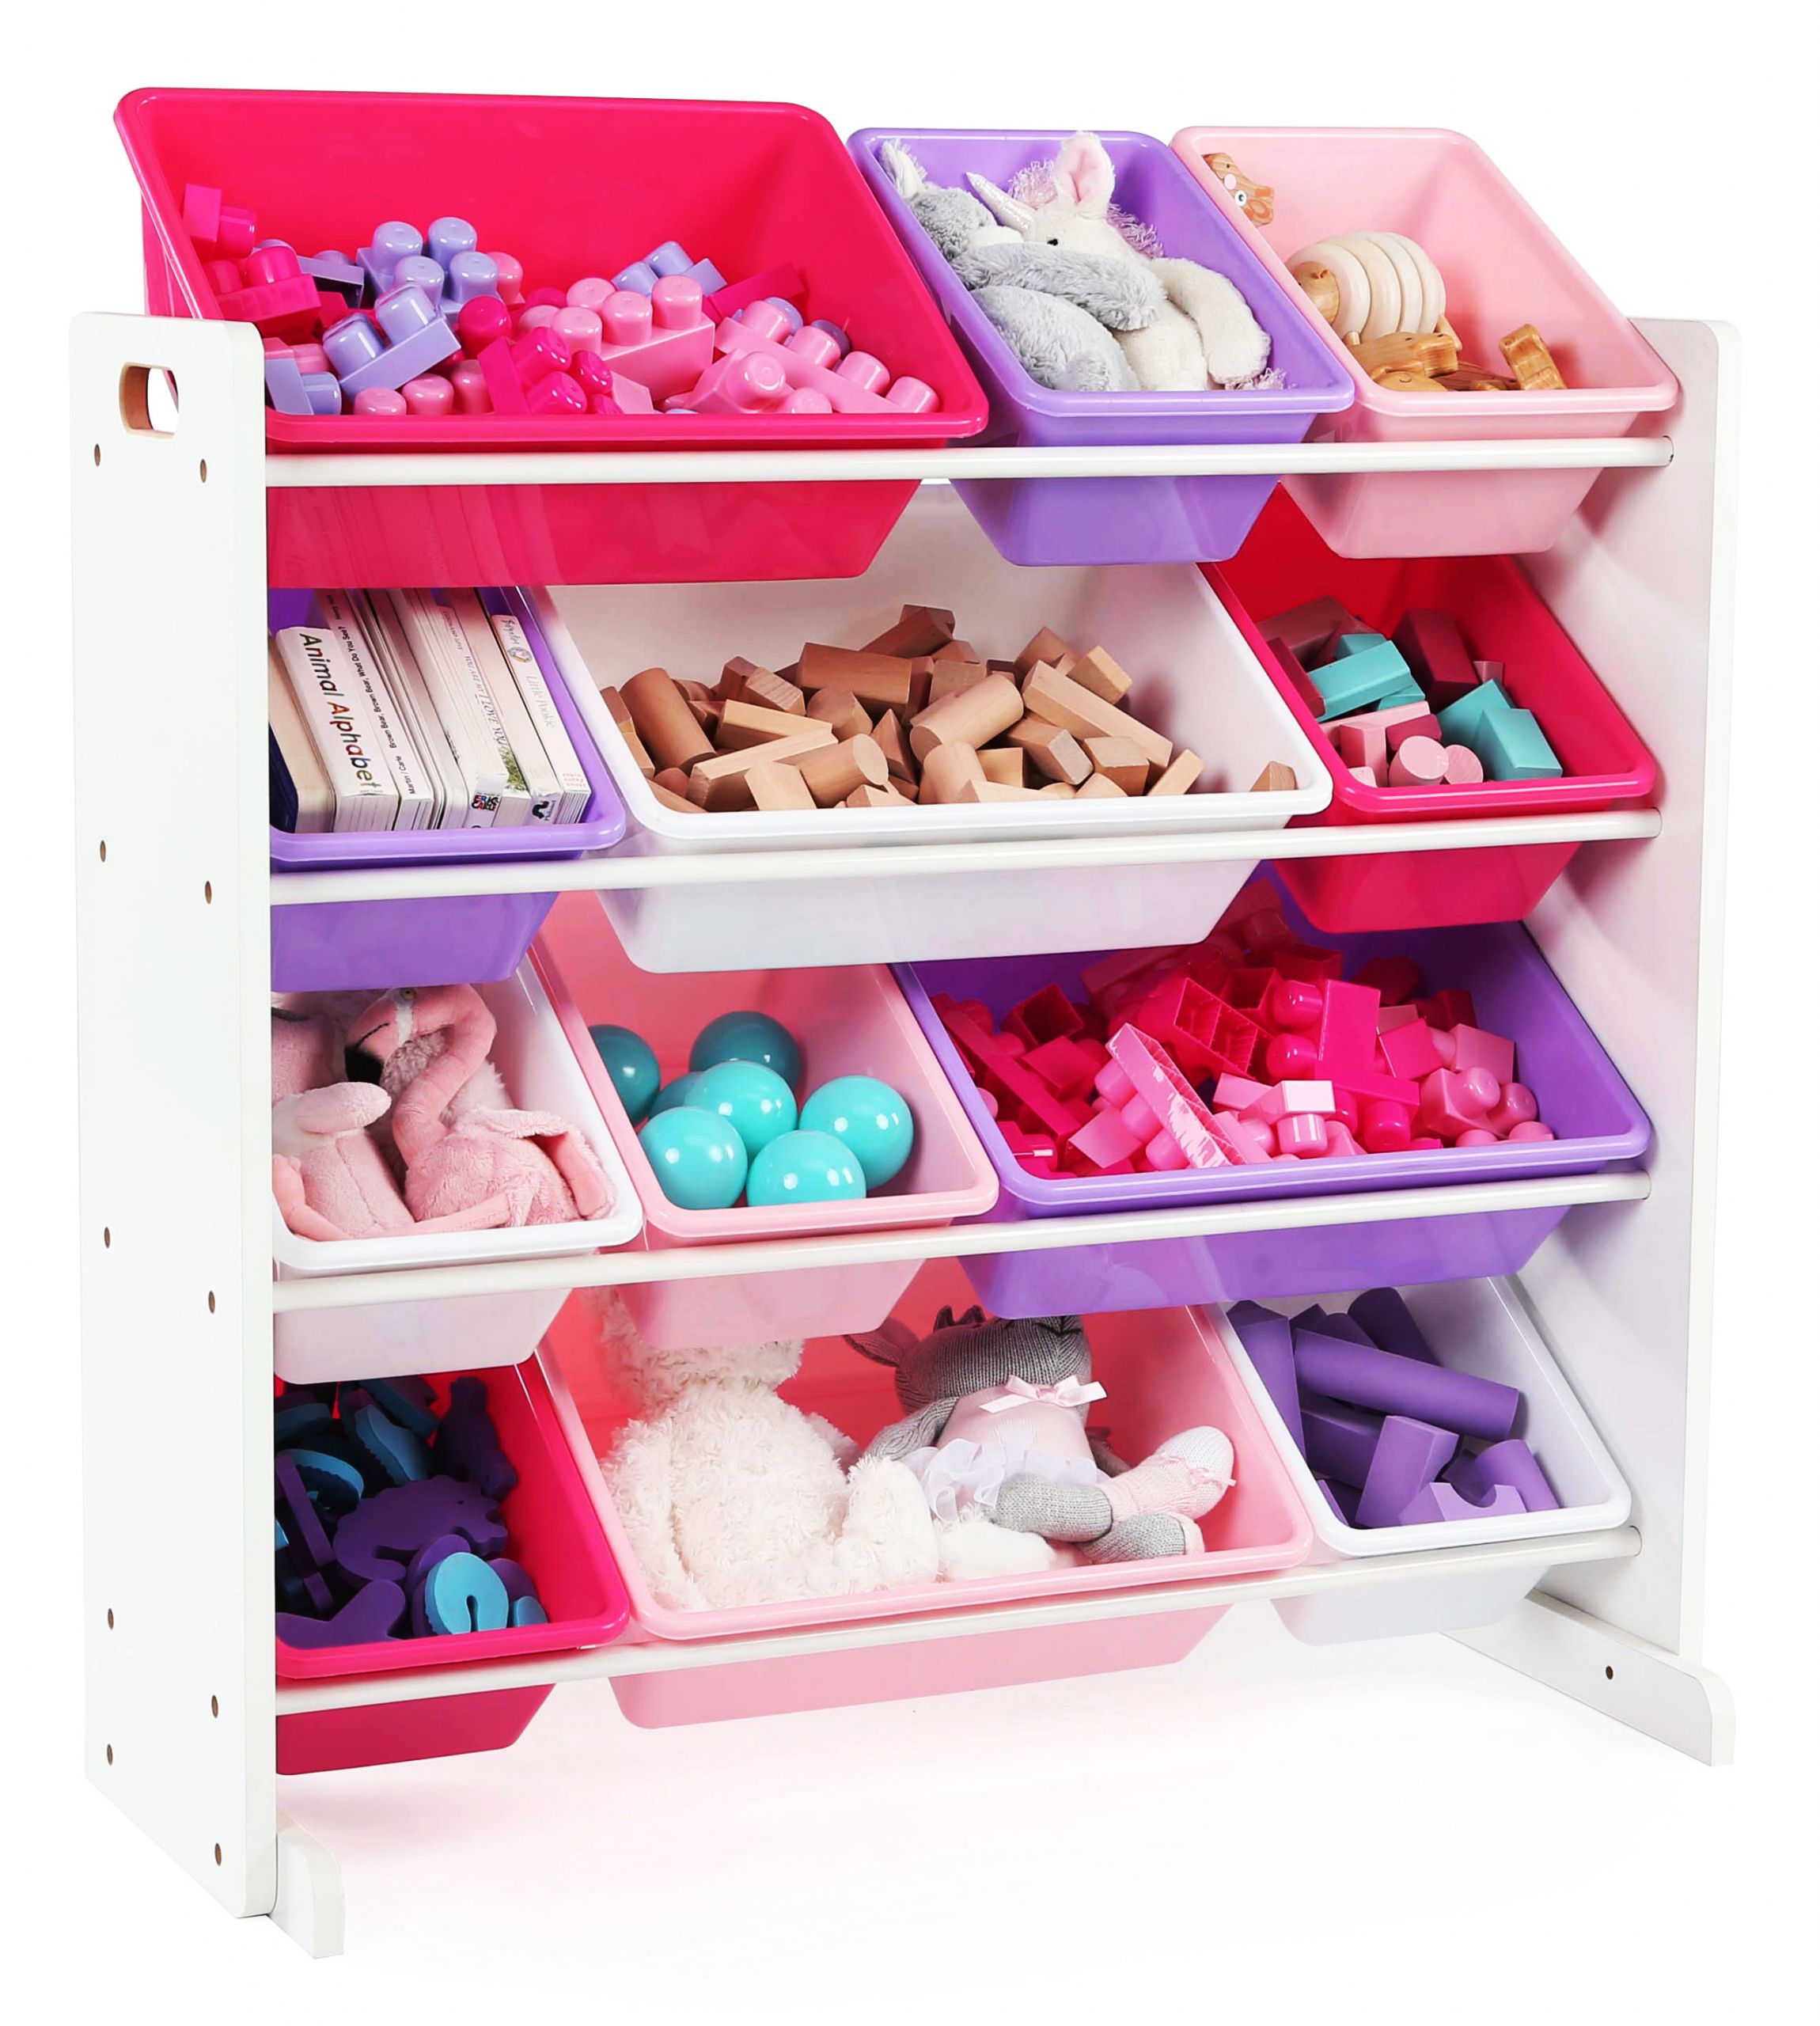 Storage Bin For Kids
 Tot Tutors Kids Toy Storage Organizer with 12 Plastic Bins